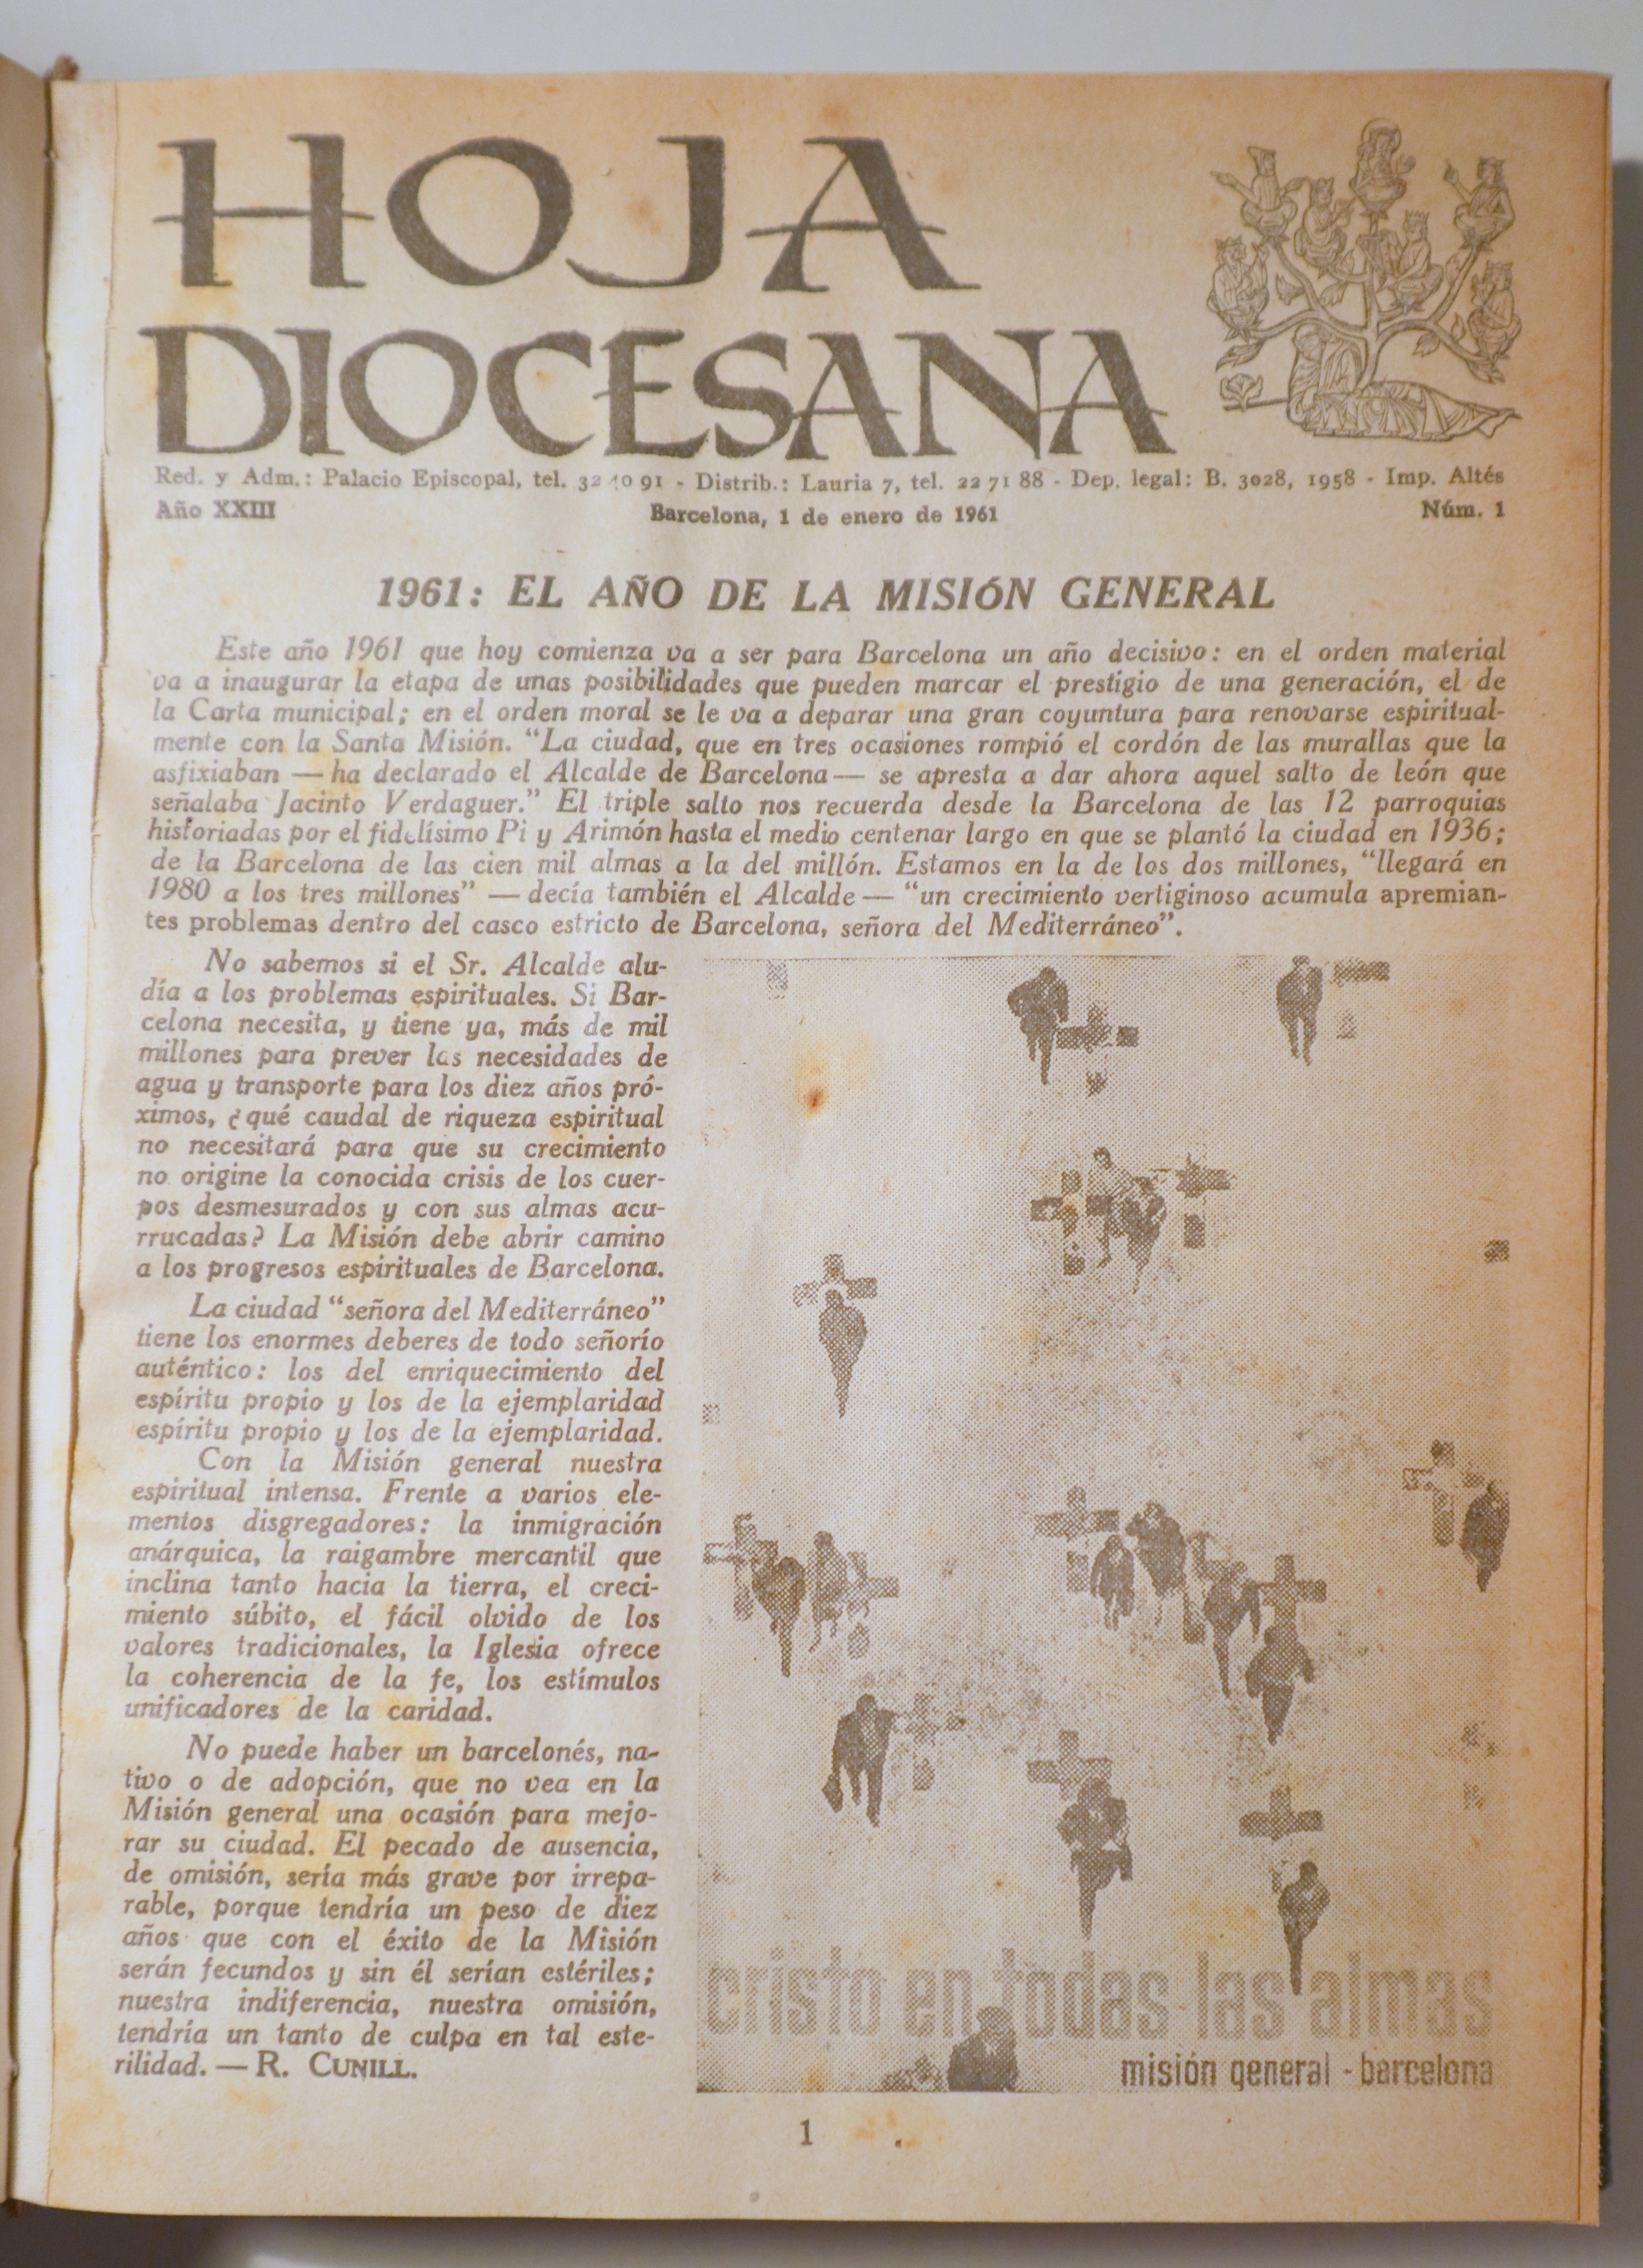 HOJA DIOCESANA 1961 - Barcelona 1961 - Muy ilustrado